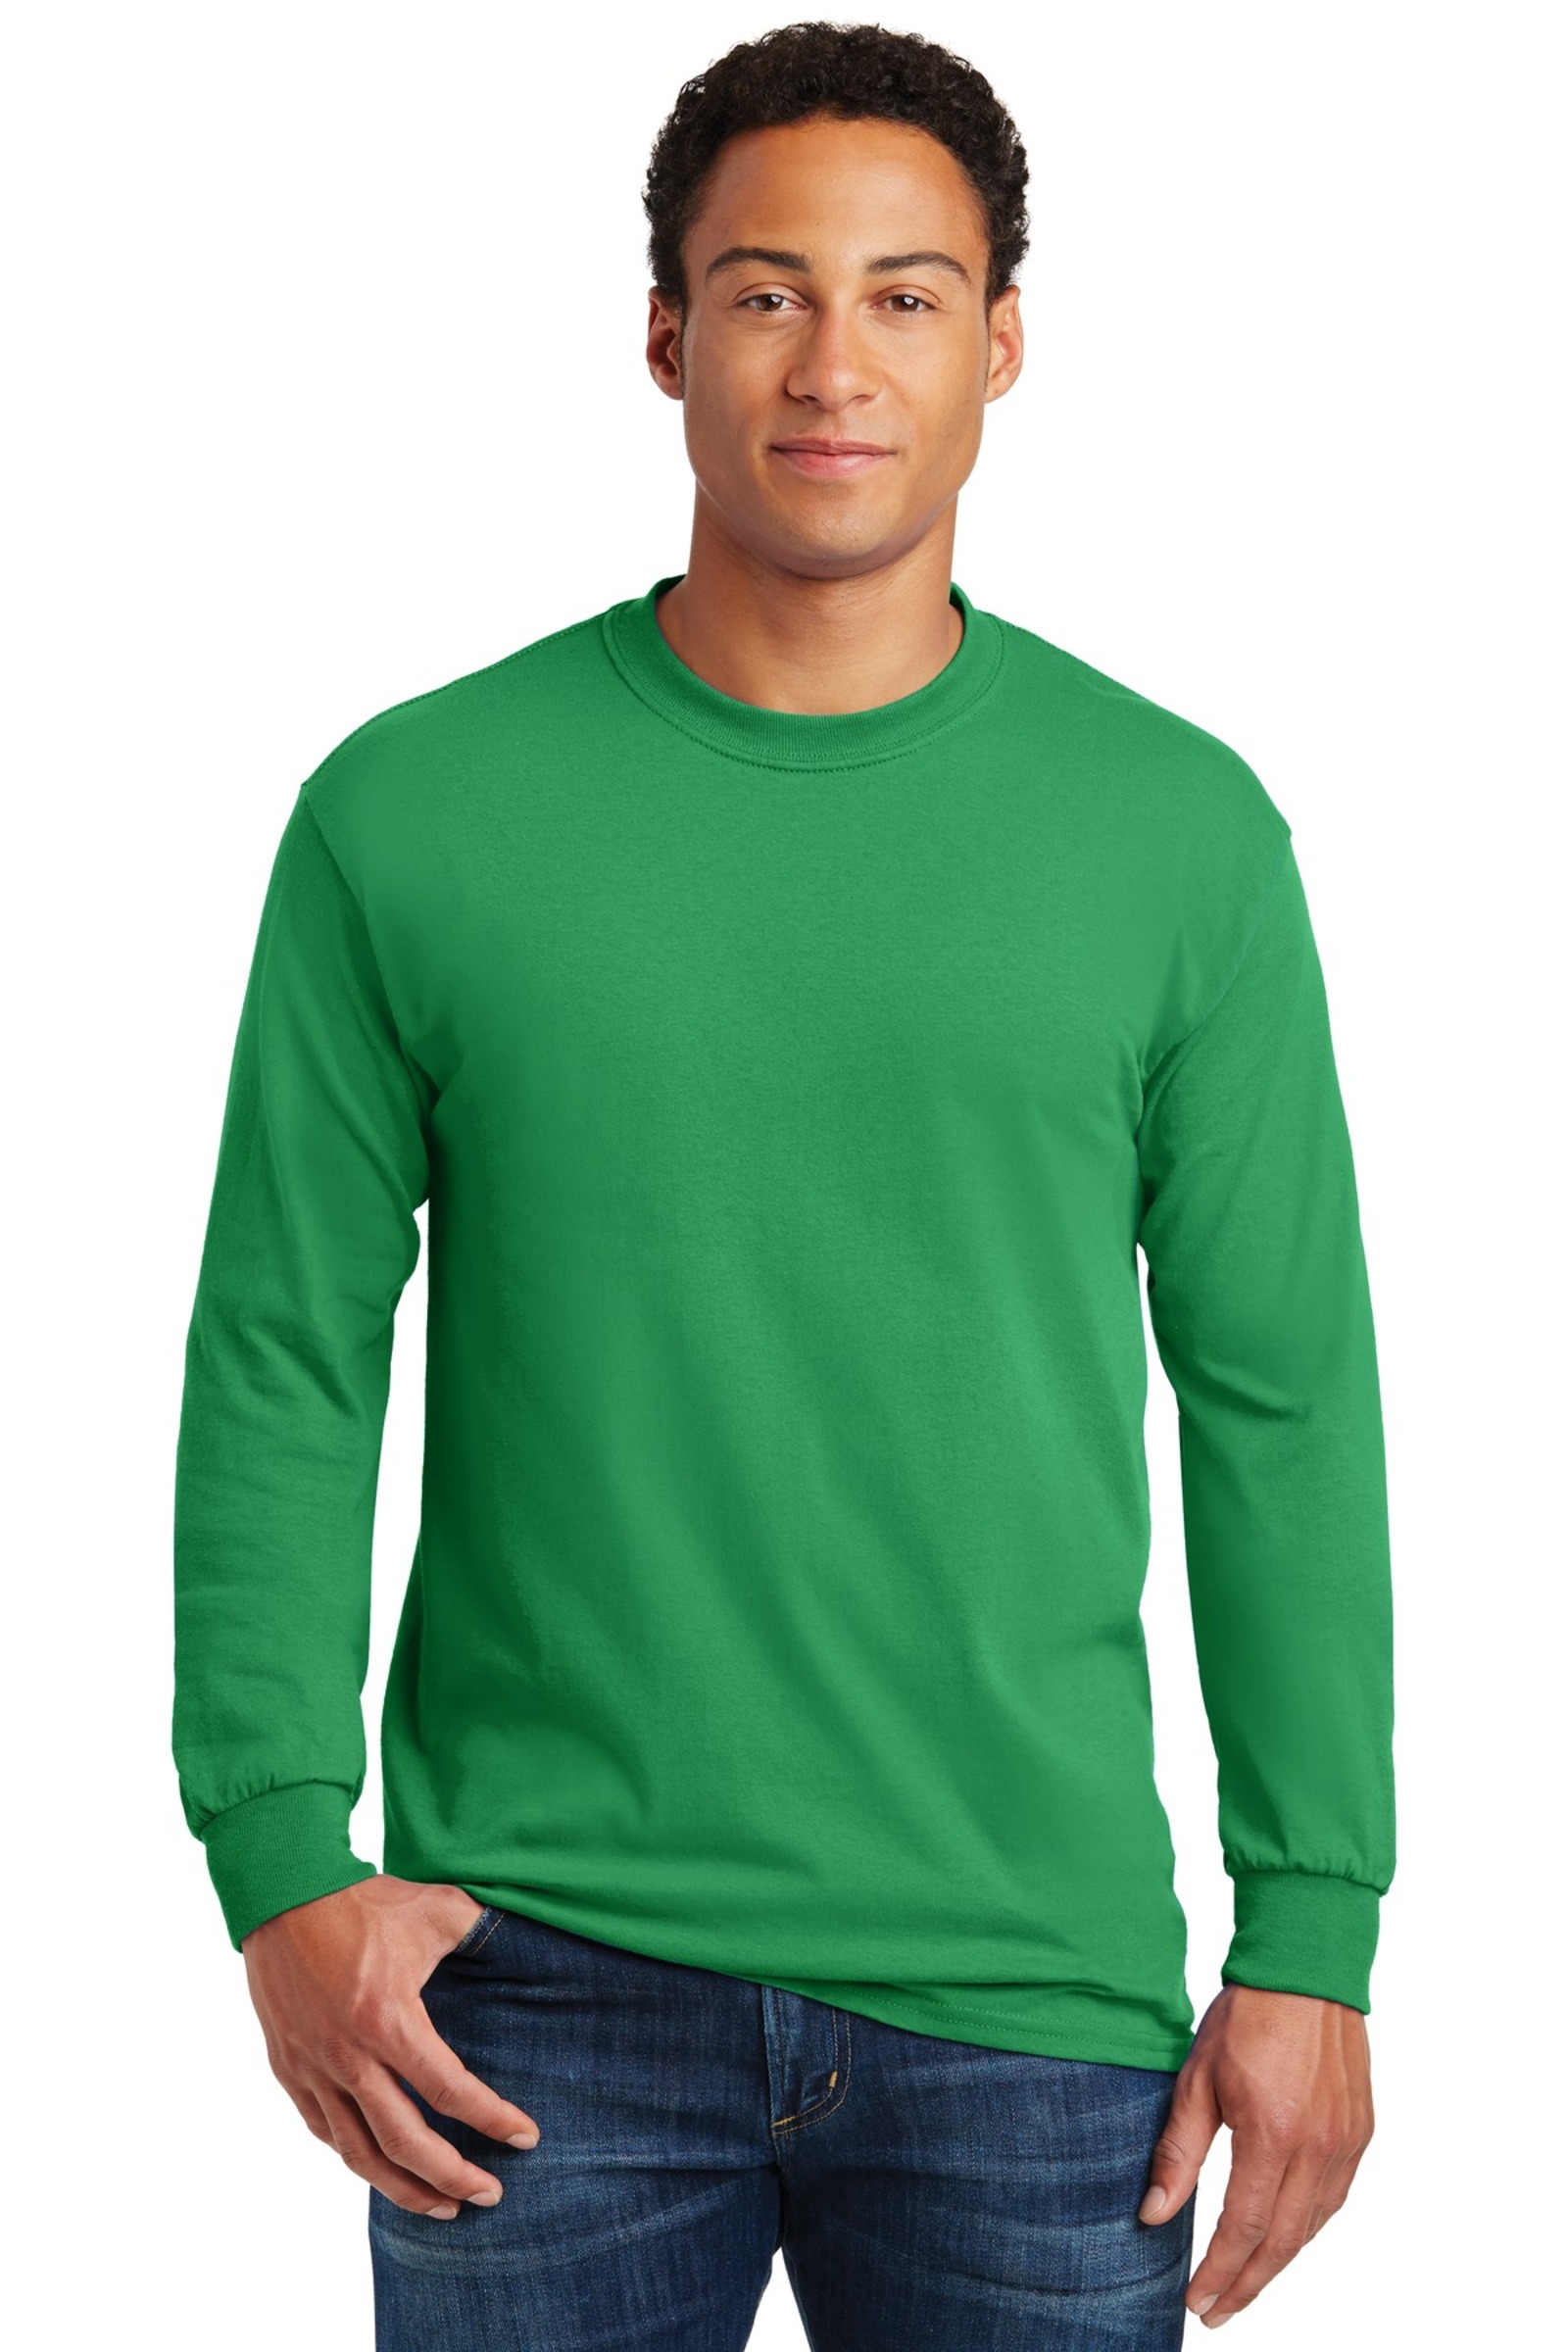 Gildan Embroidered Men's Heavy Cotton 100% Cotton Long Sleeve T-Shirt ...